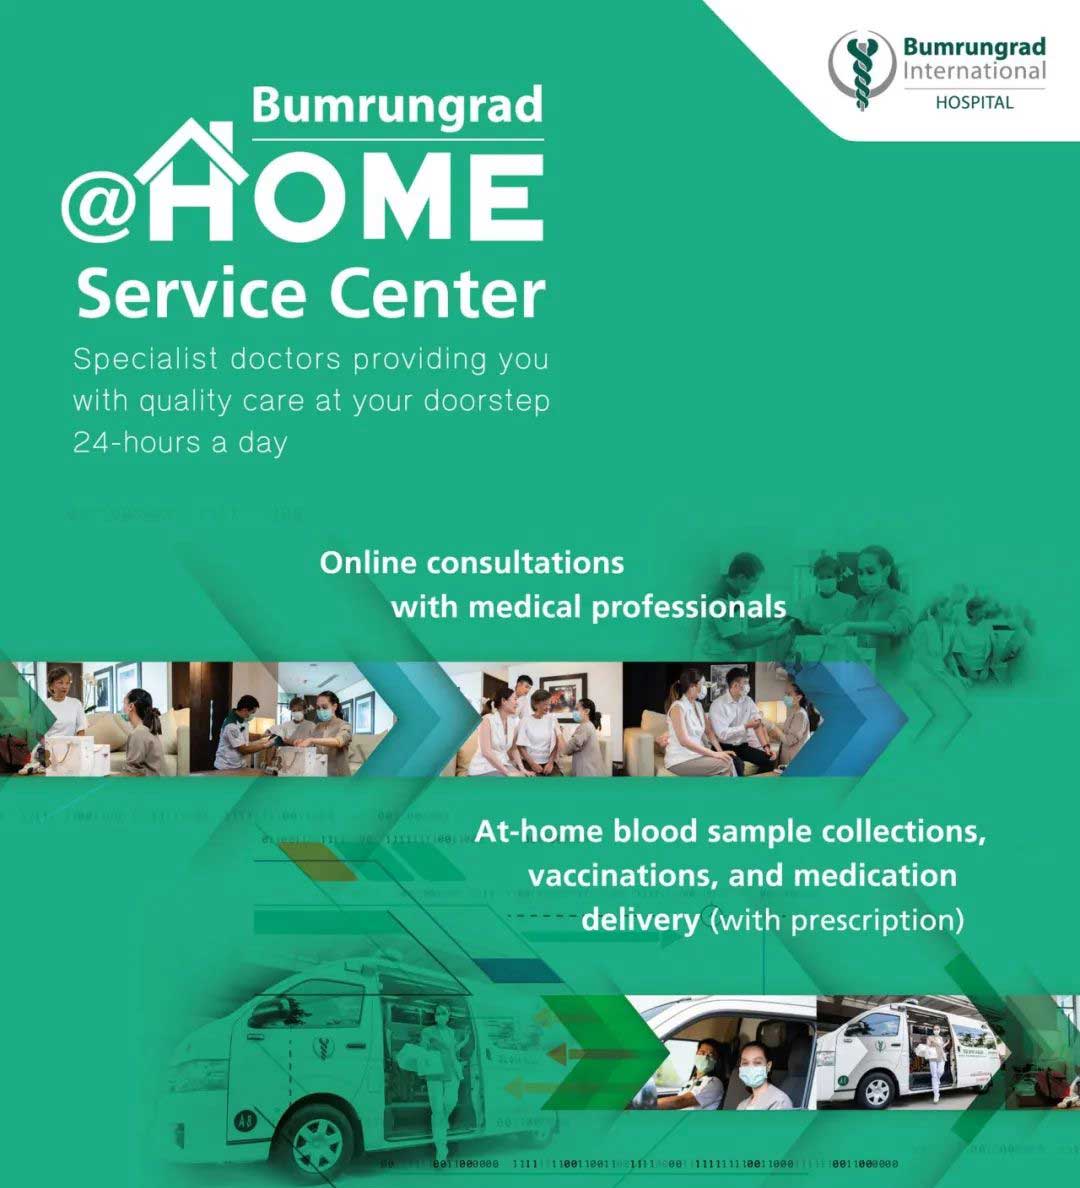 Bumrungrad @ Home服务中心专家医生 全天候24小时为您提供优质服务